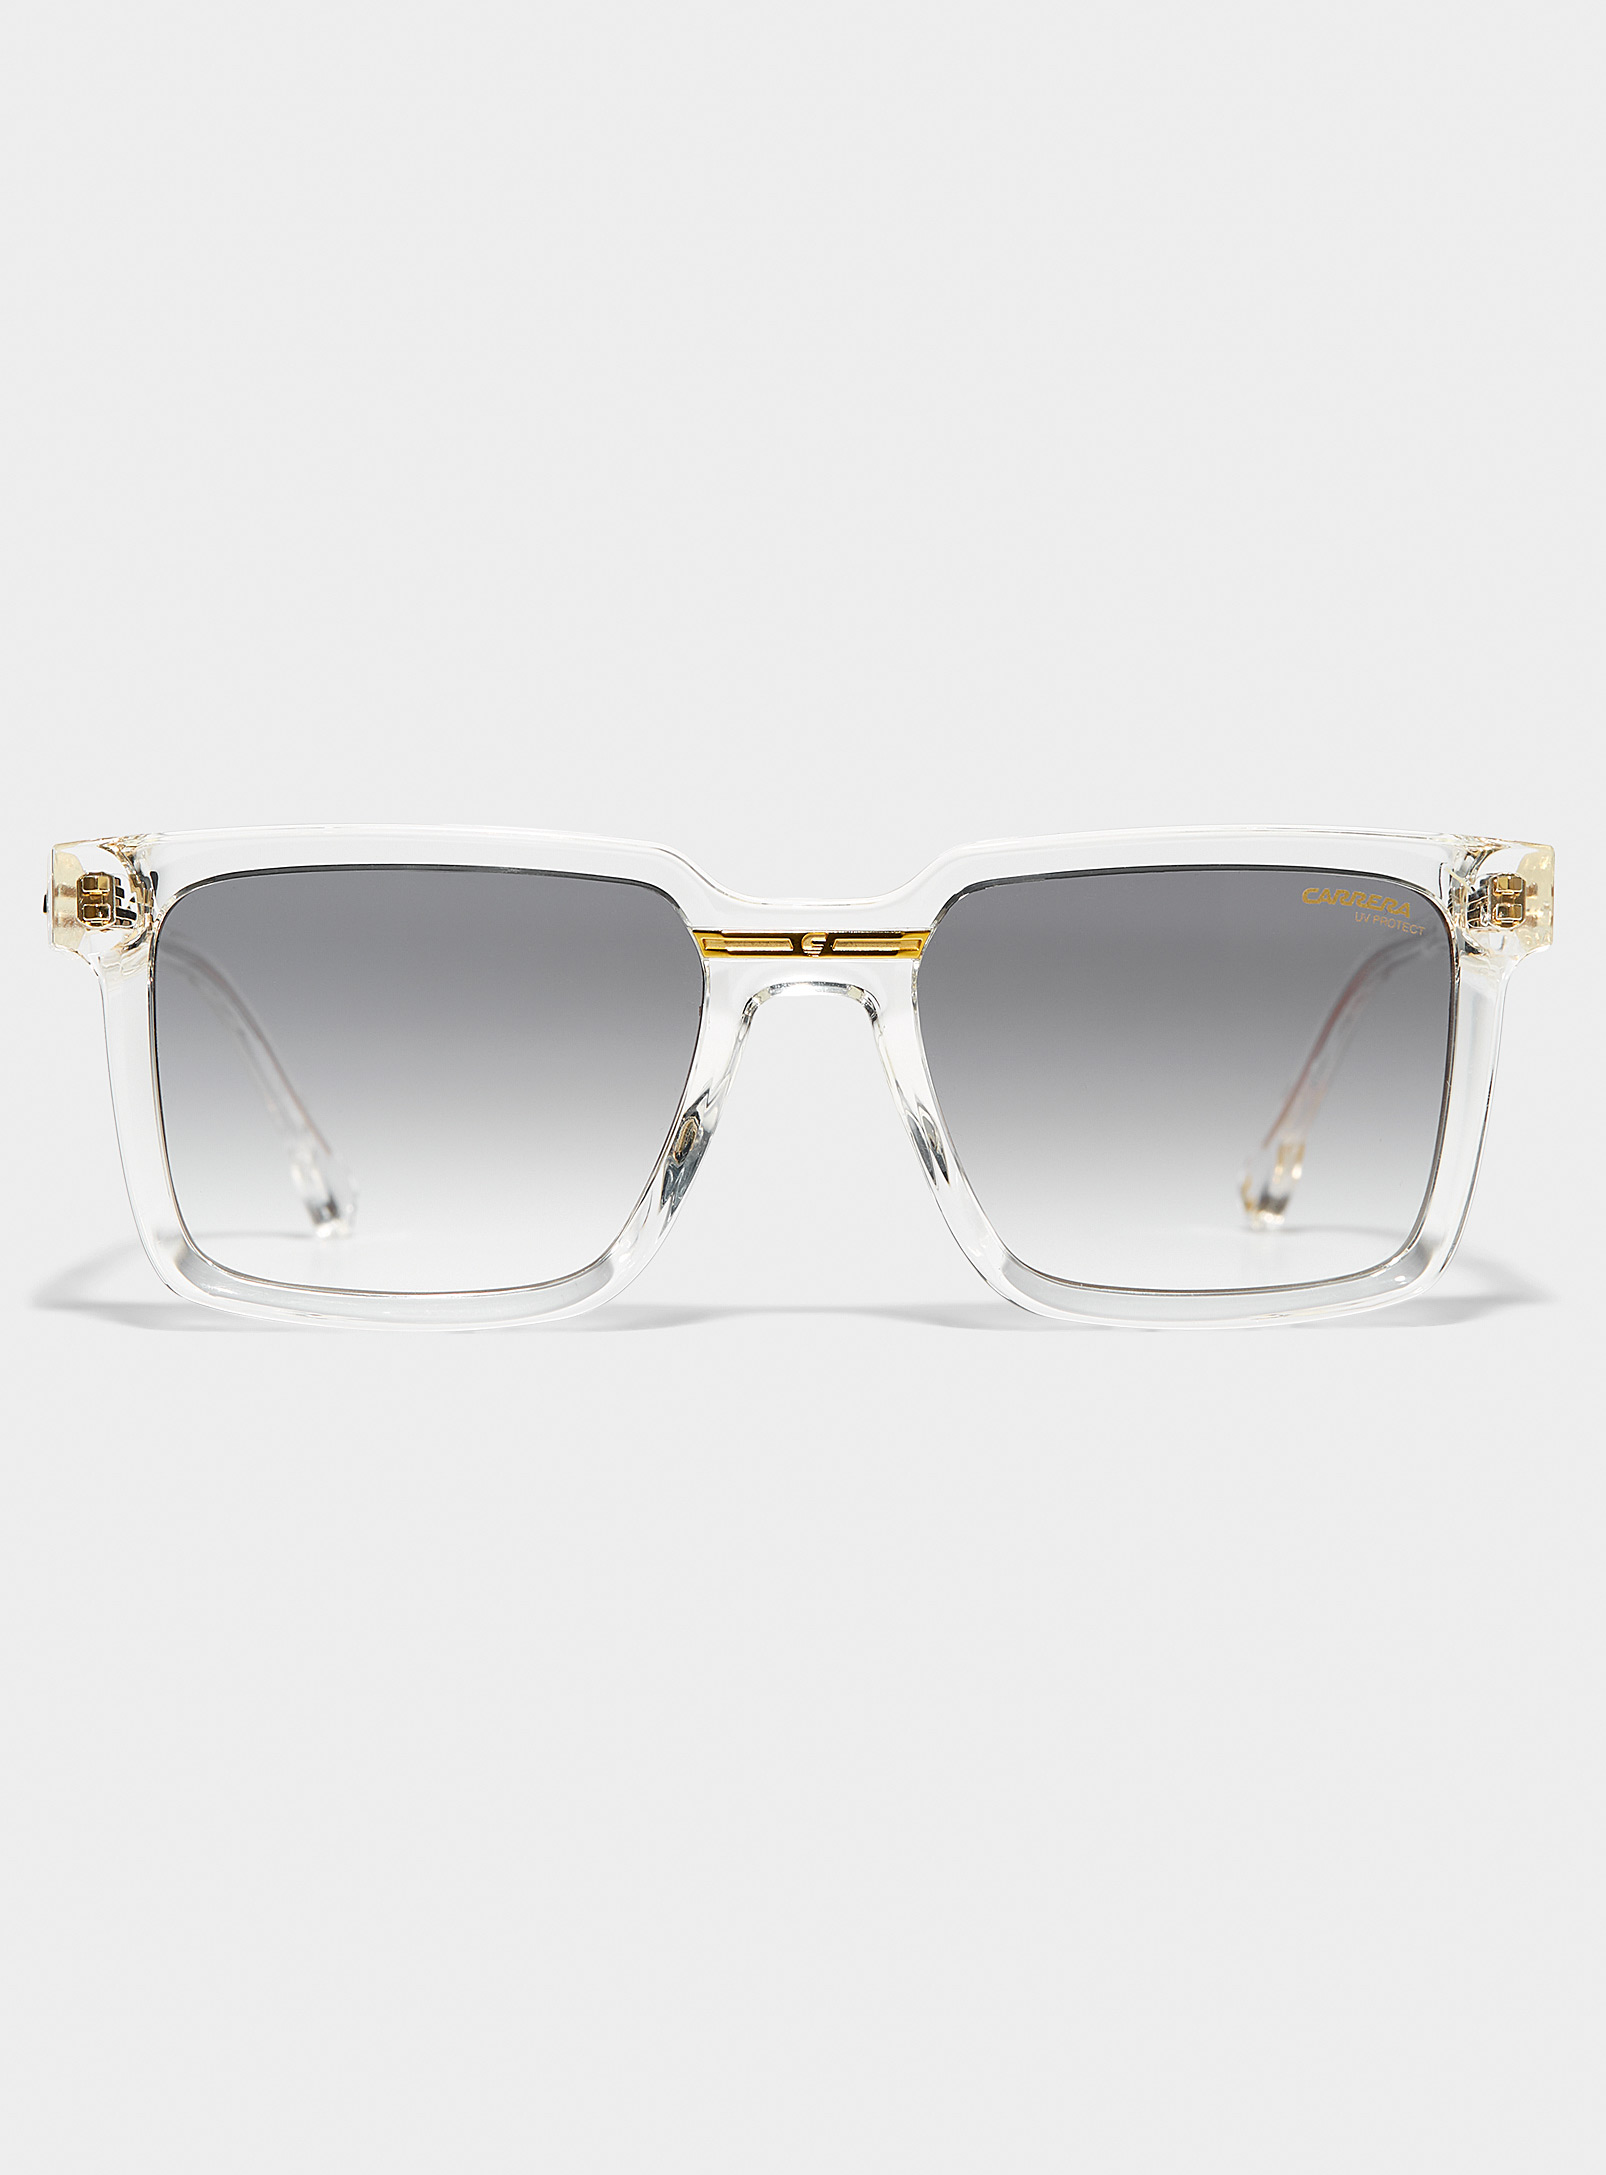 Carrera - Men's Victory translucent frame sunglasses